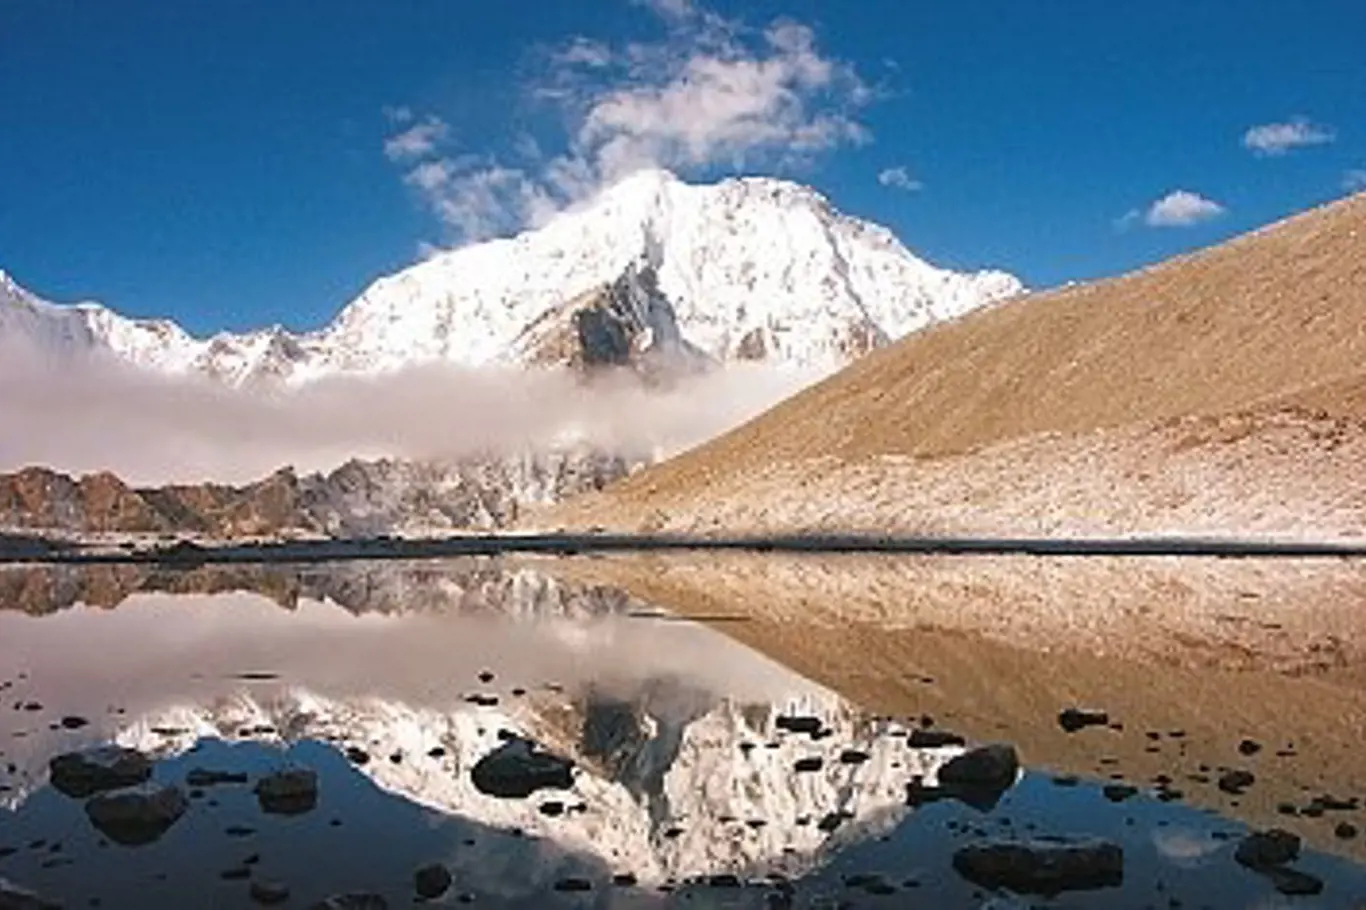 Osmitisícovky Radka Jaroše: Shisha Pangma (8 046 m n. m.)